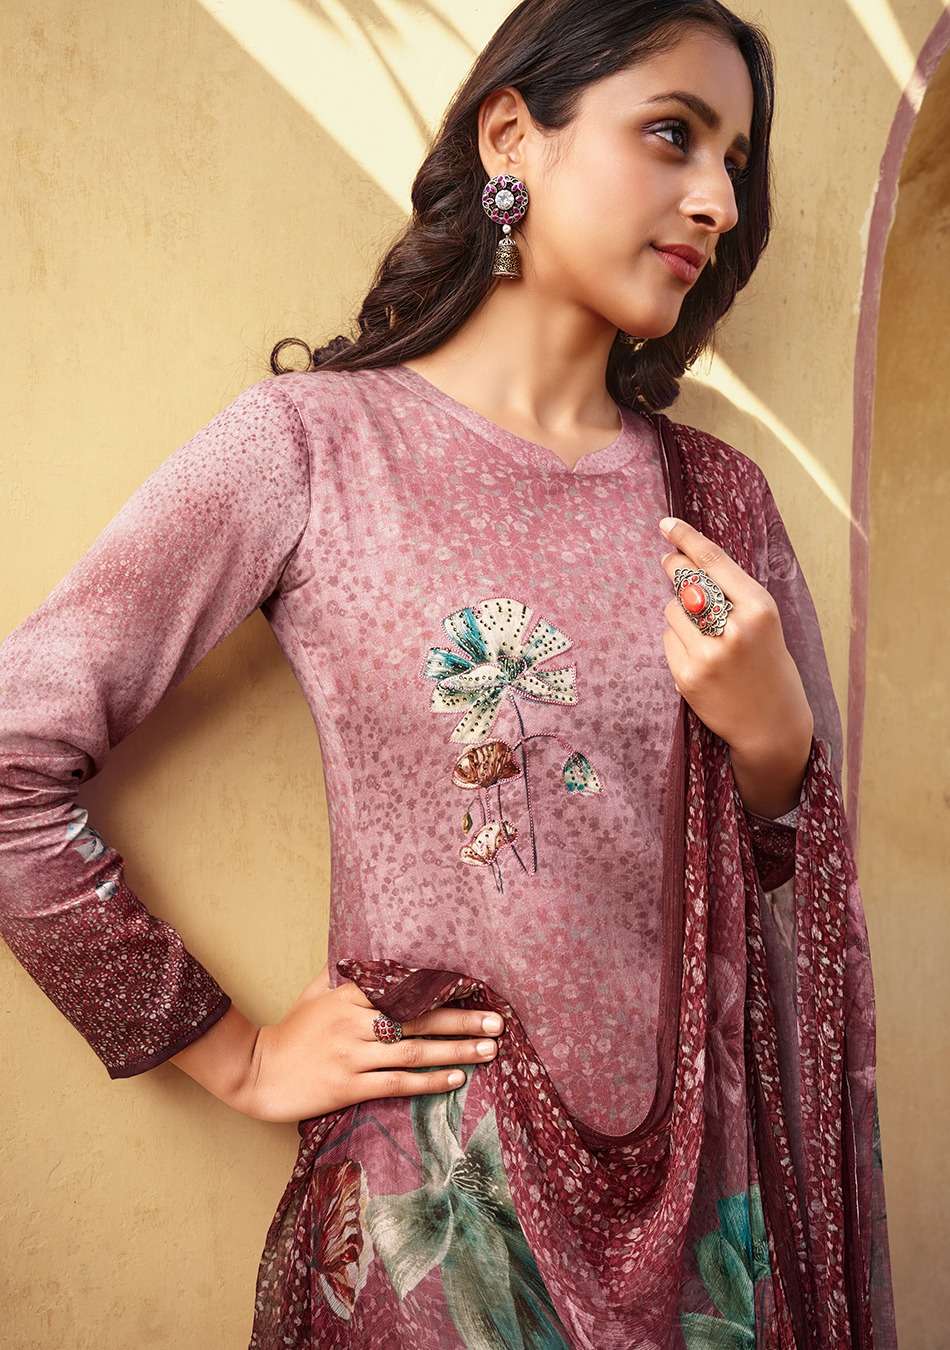 rupali fashion lub vol-2 3501-3506 series indian designer salwar kameez catalogue manufacturer surat